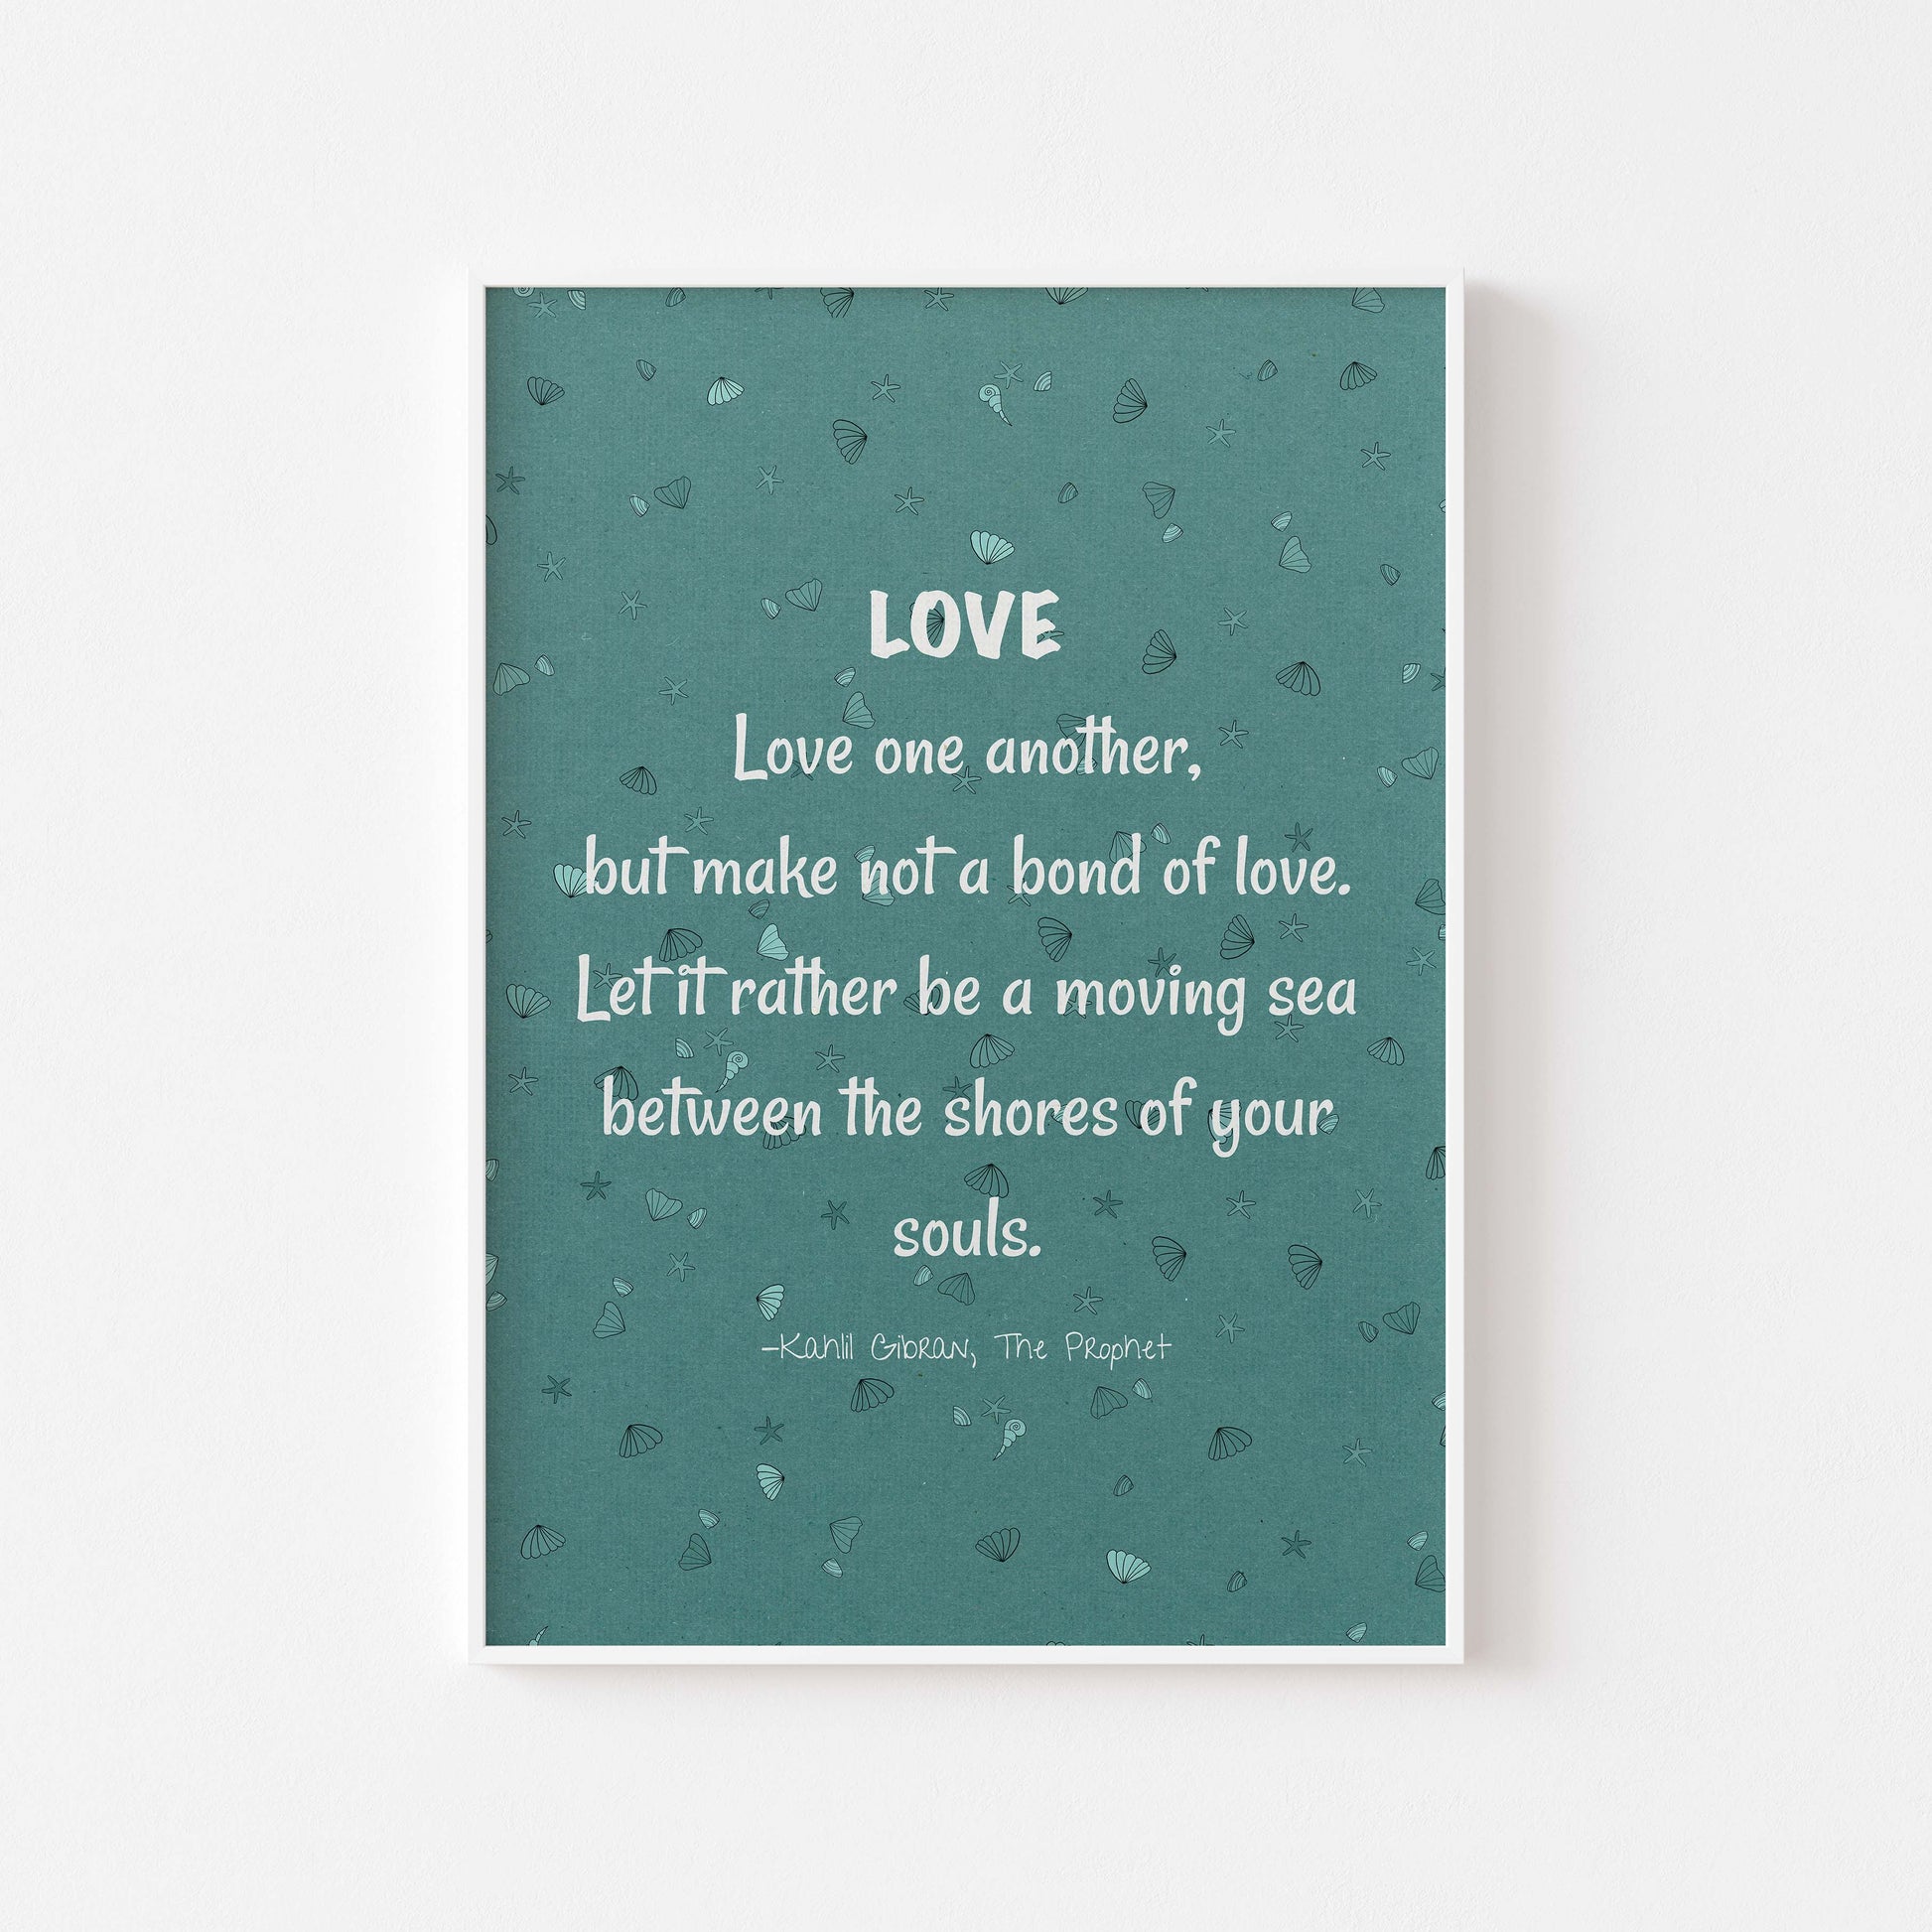 Kahlil Gibran on love quote blue & white poster in white frame